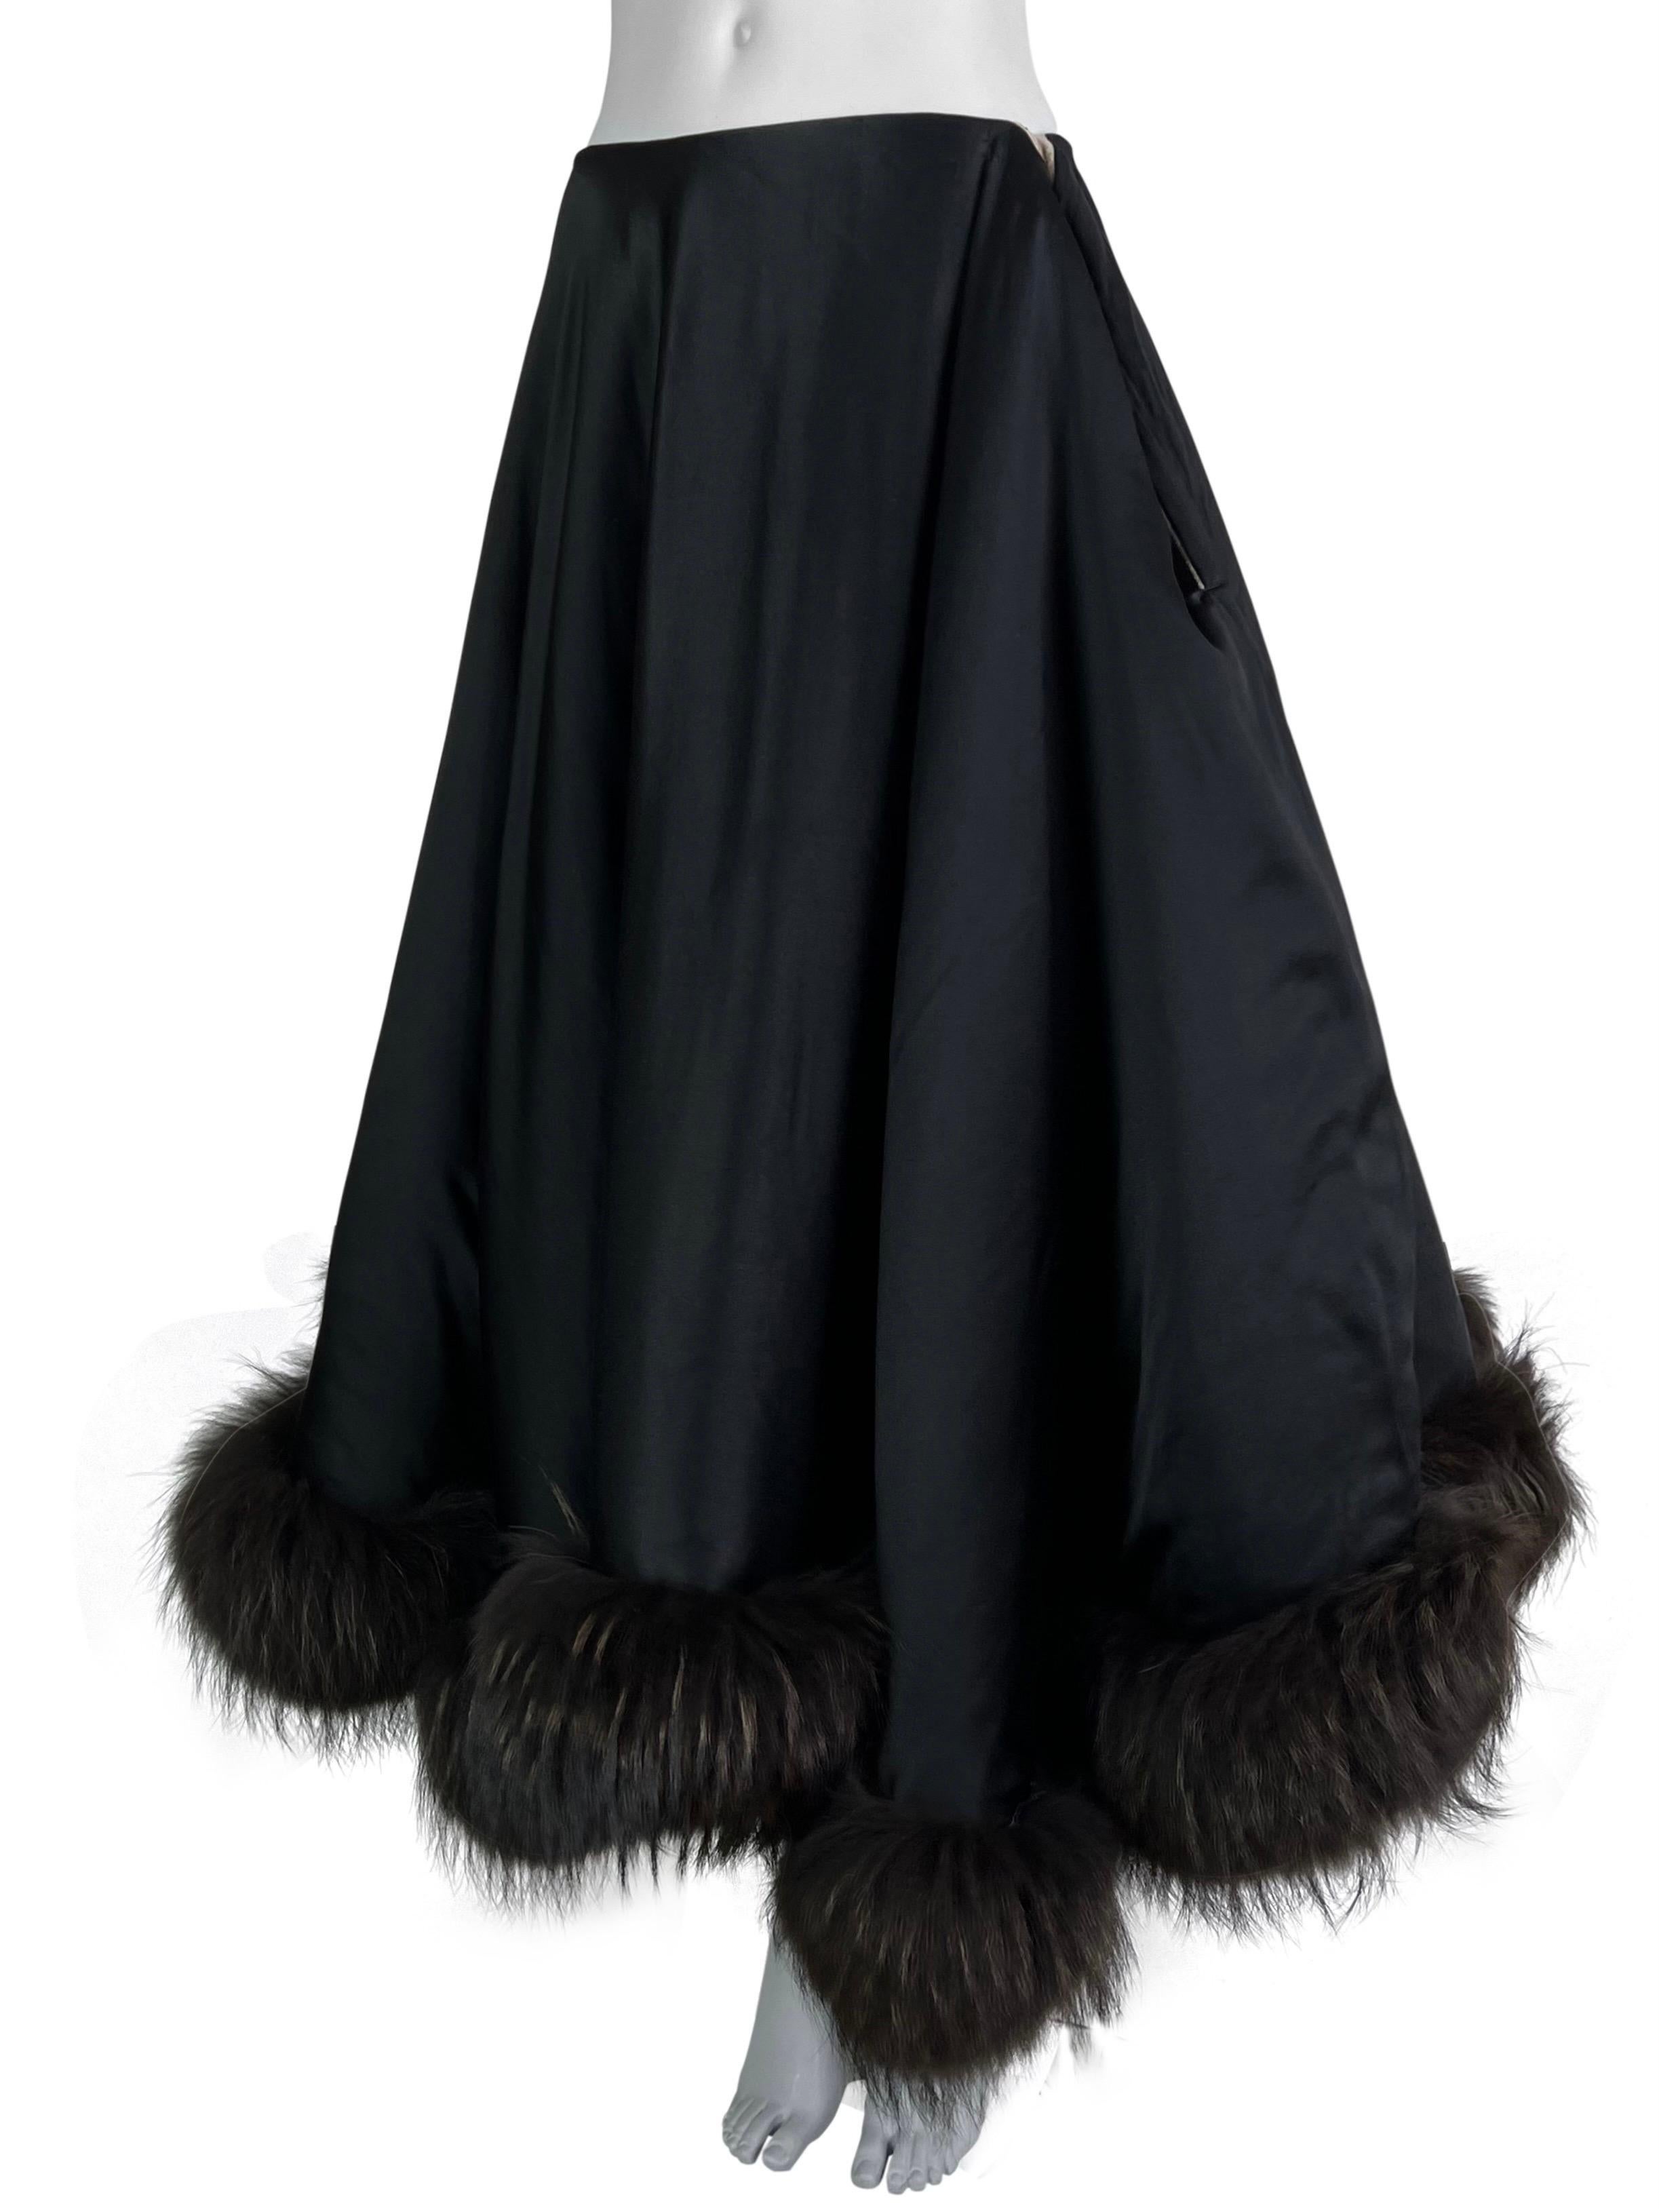 Yohji Yamamoto Fall 2000 Padded Silk Skirt With Fur Trim 1